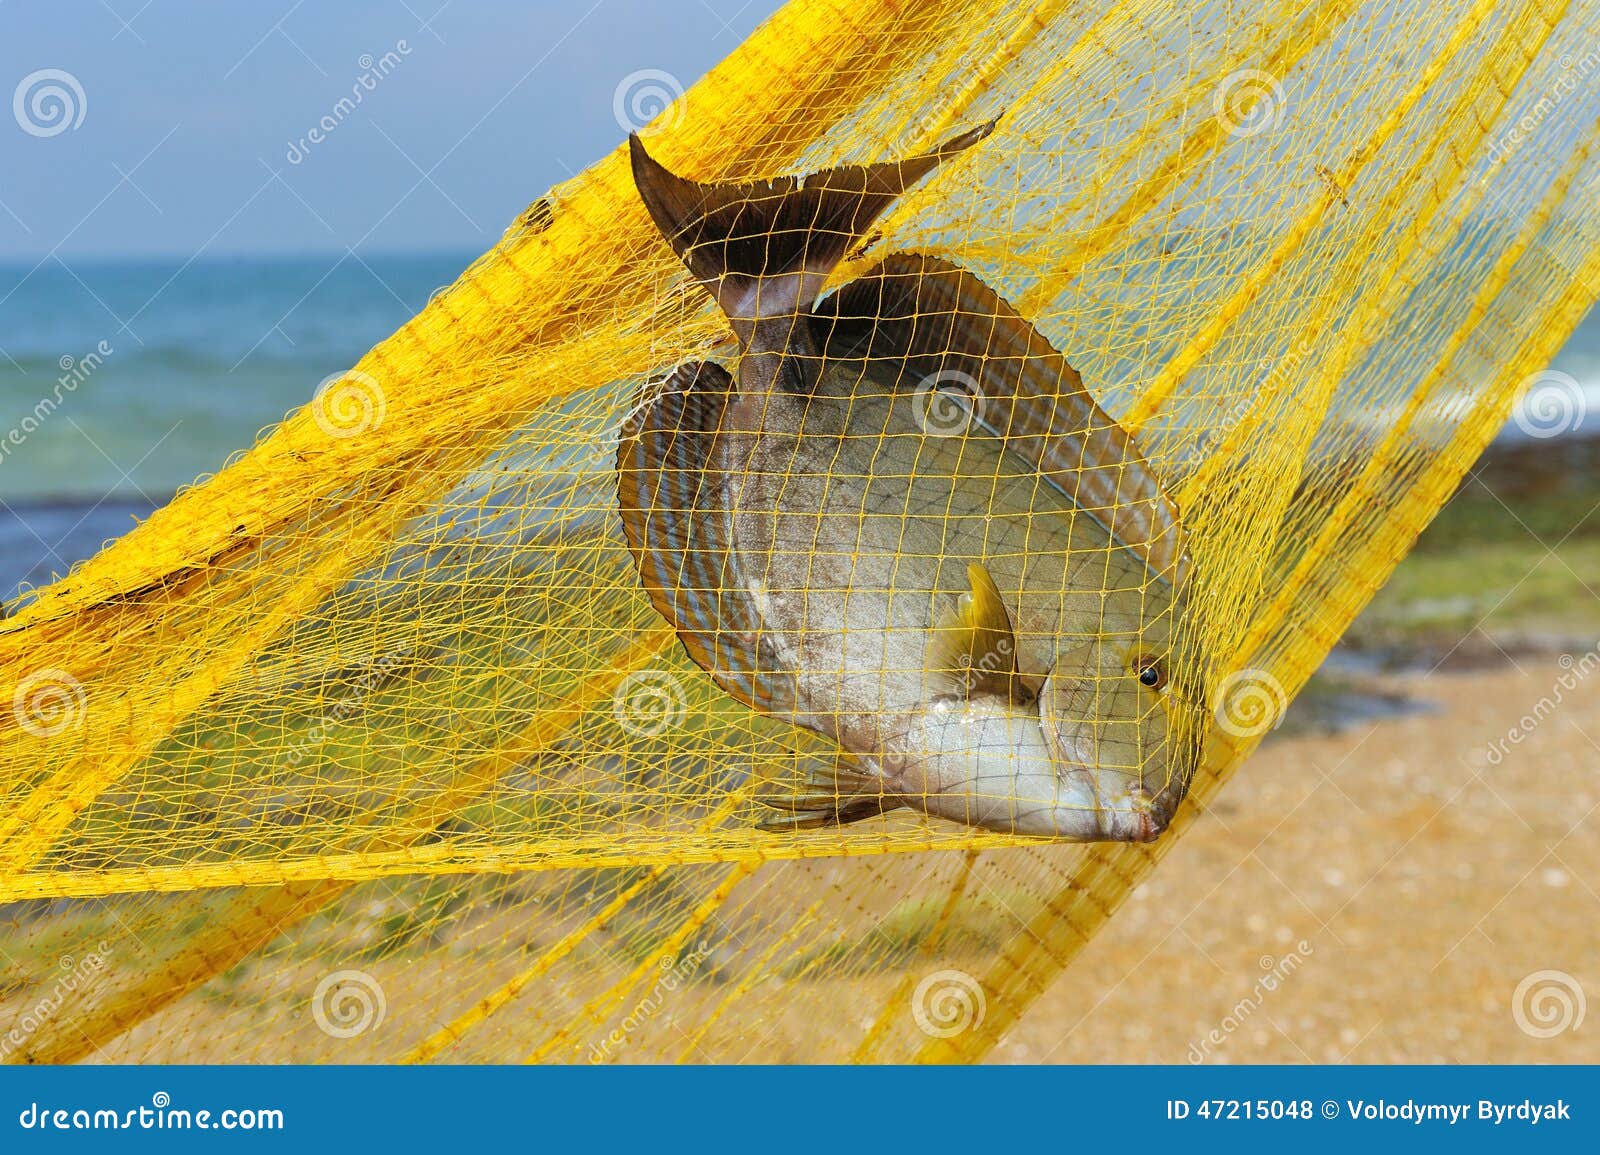 https://thumbs.dreamstime.com/z/fish-fishing-nets-big-yellow-47215048.jpg